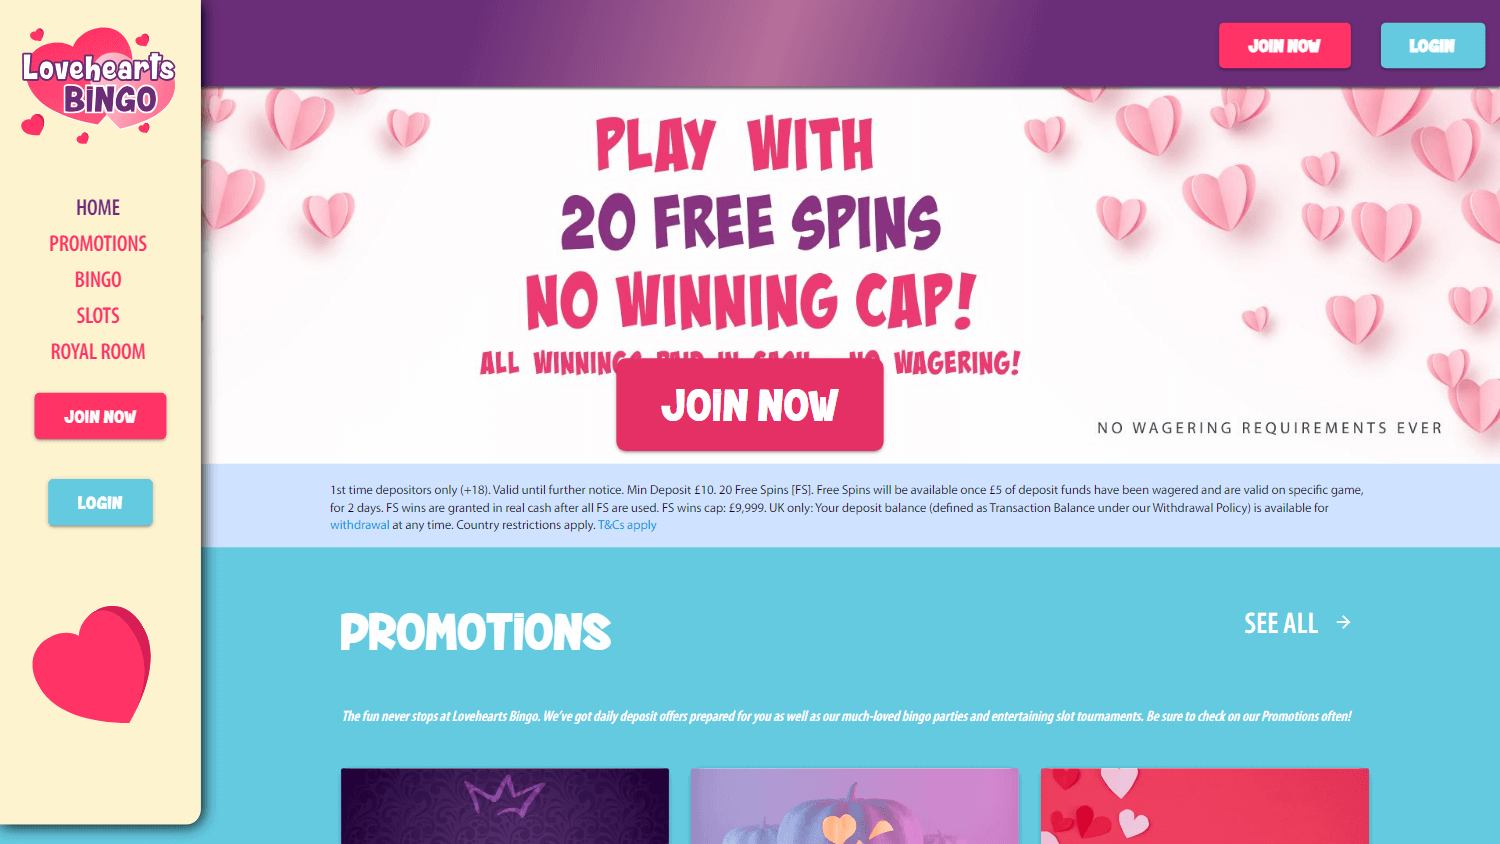 lovehearts_bingo_casino_homepage_desktop